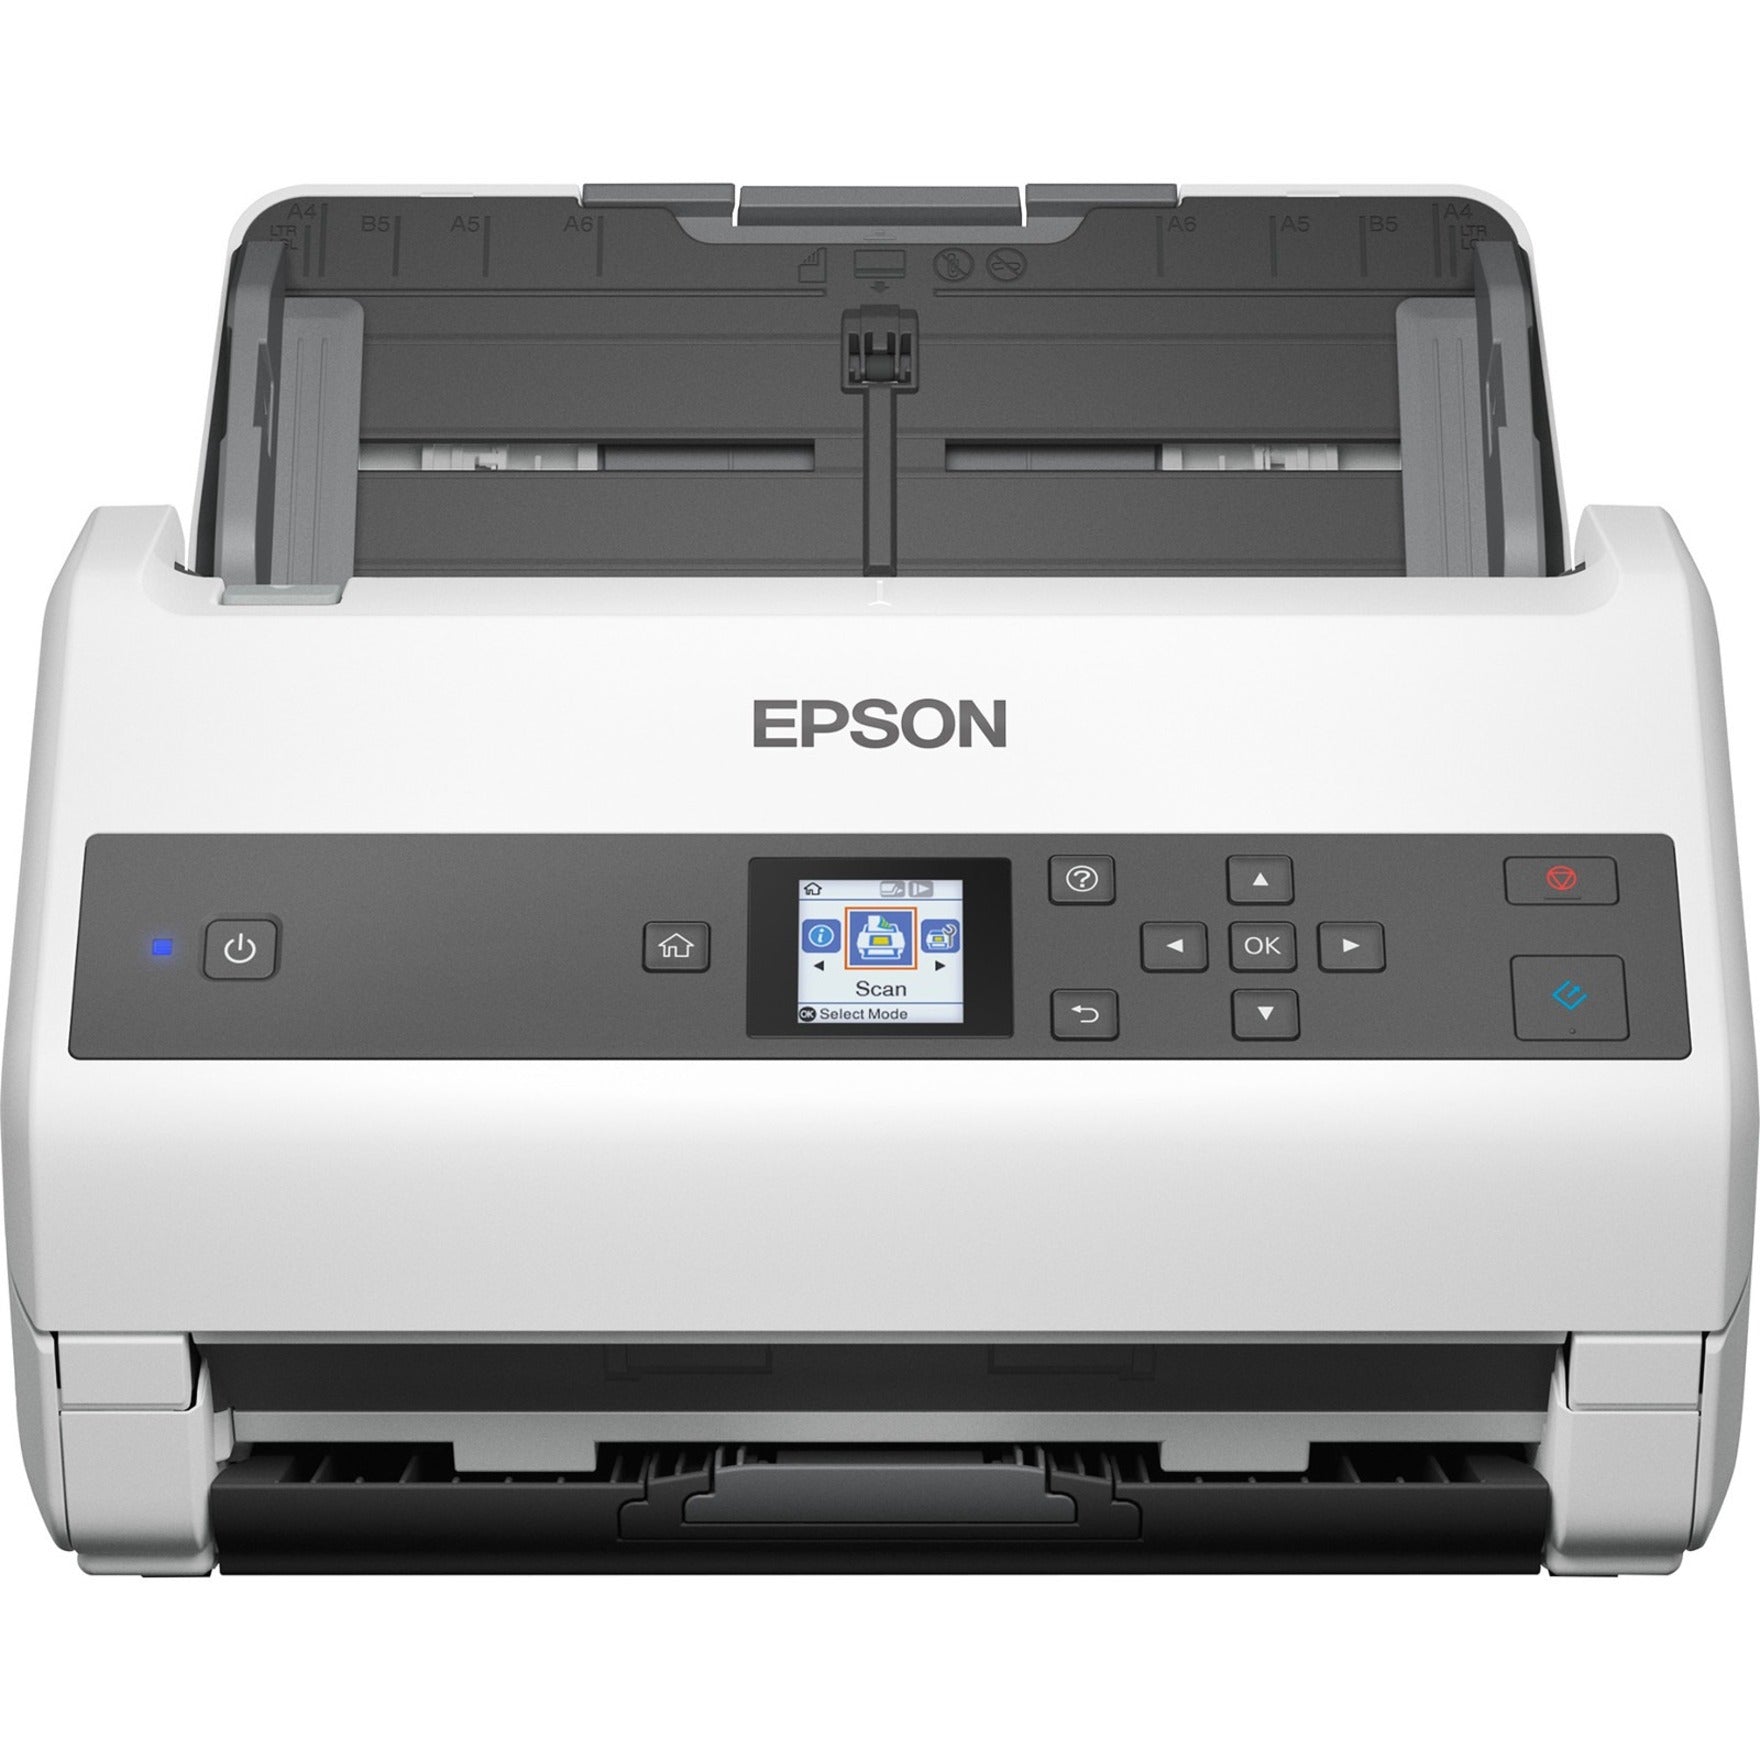 Epson B11B251201 WorkForce DS-970 Color Duplex Workgroup Document Scanner, 600 dpi Optical